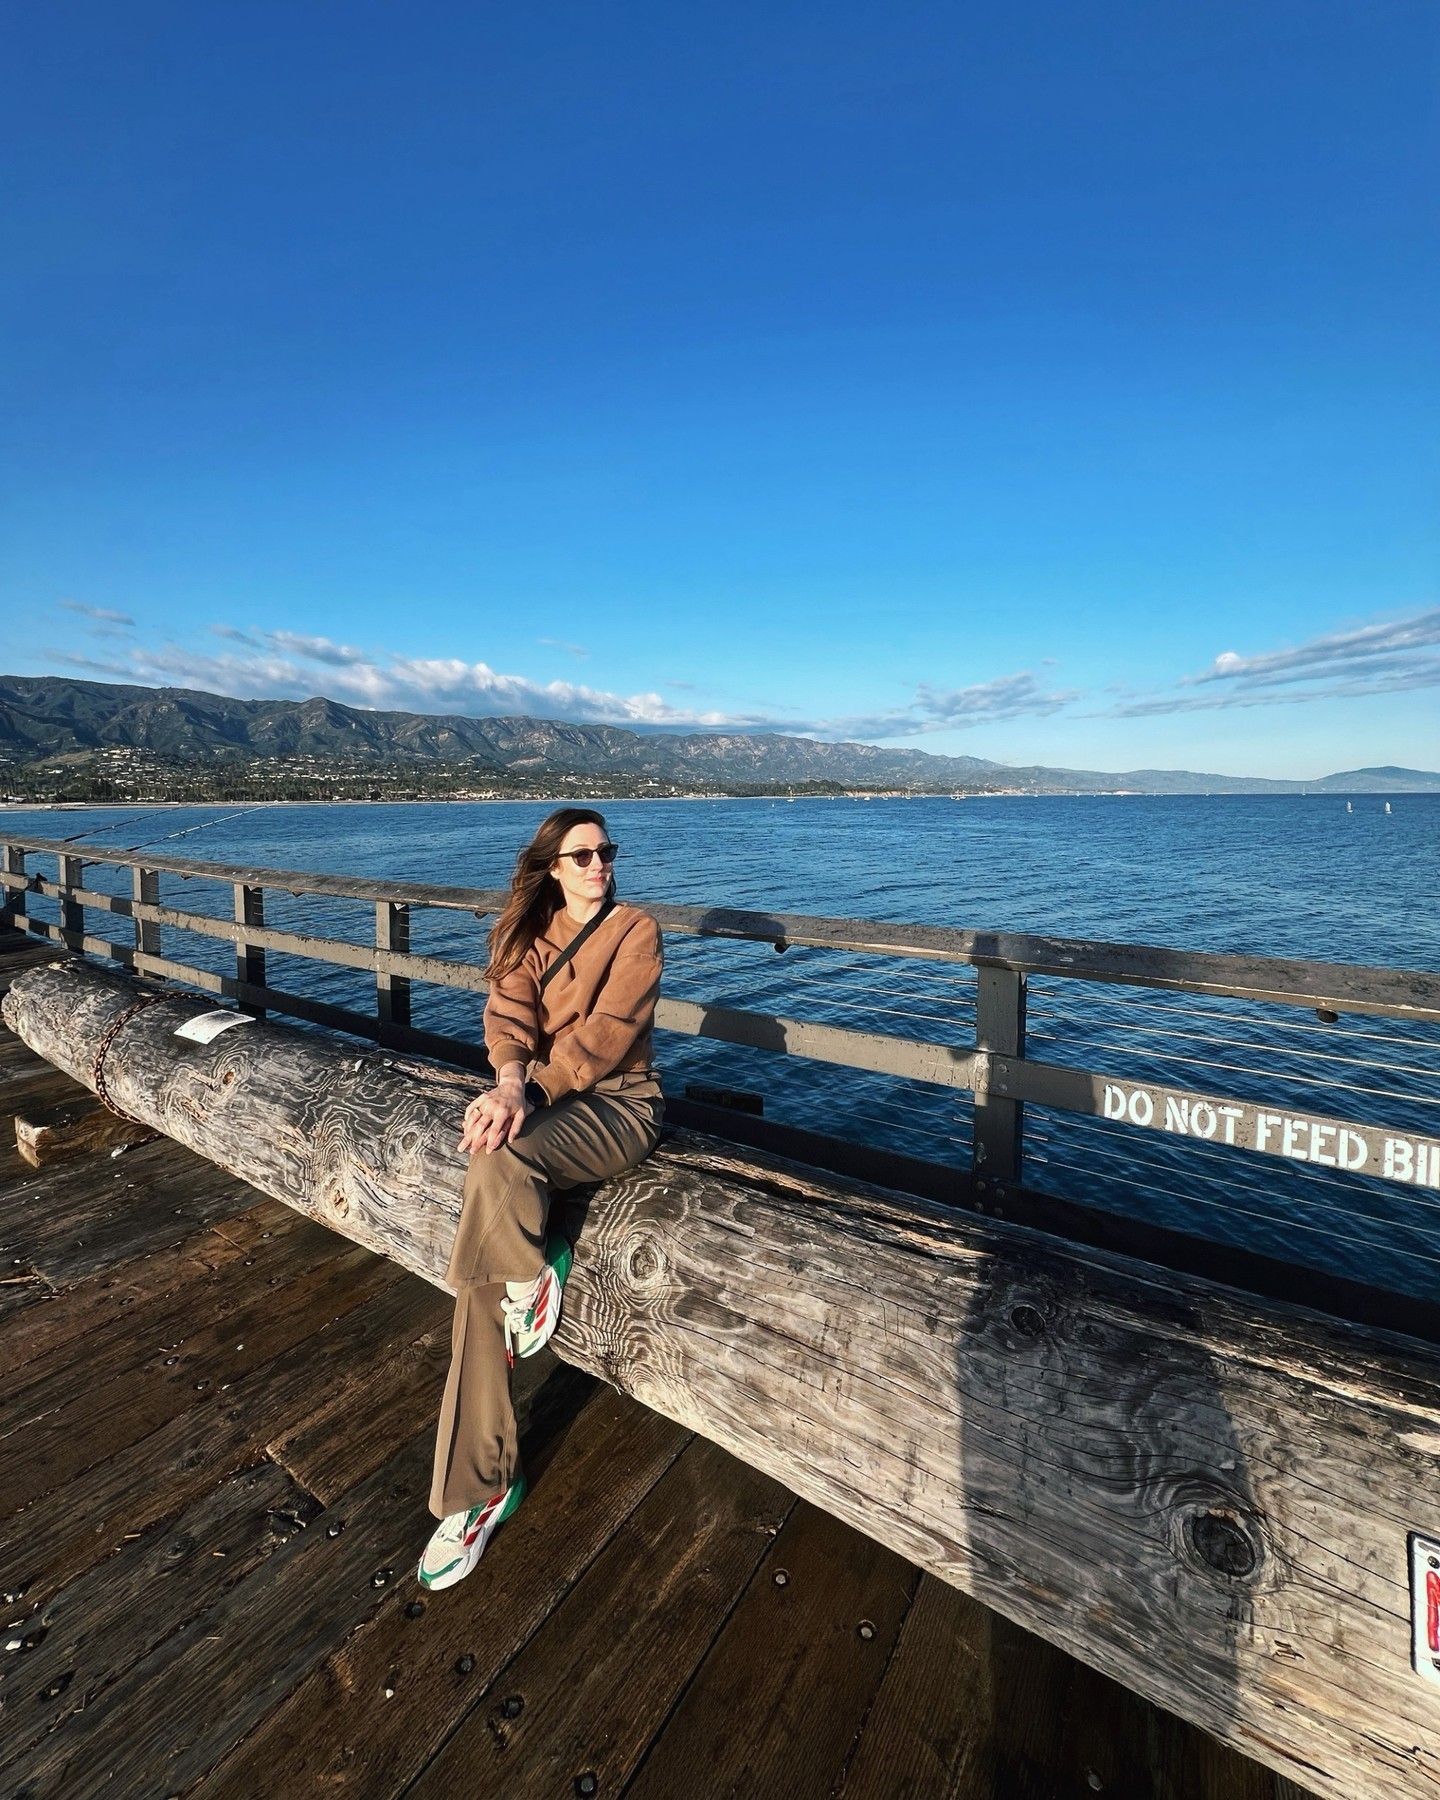 We wharf for the views, not the food. 

📍Santa Barbara, CA
📍Sterns Wharf

#welivetoexplore #exploremore #exploreeverythi